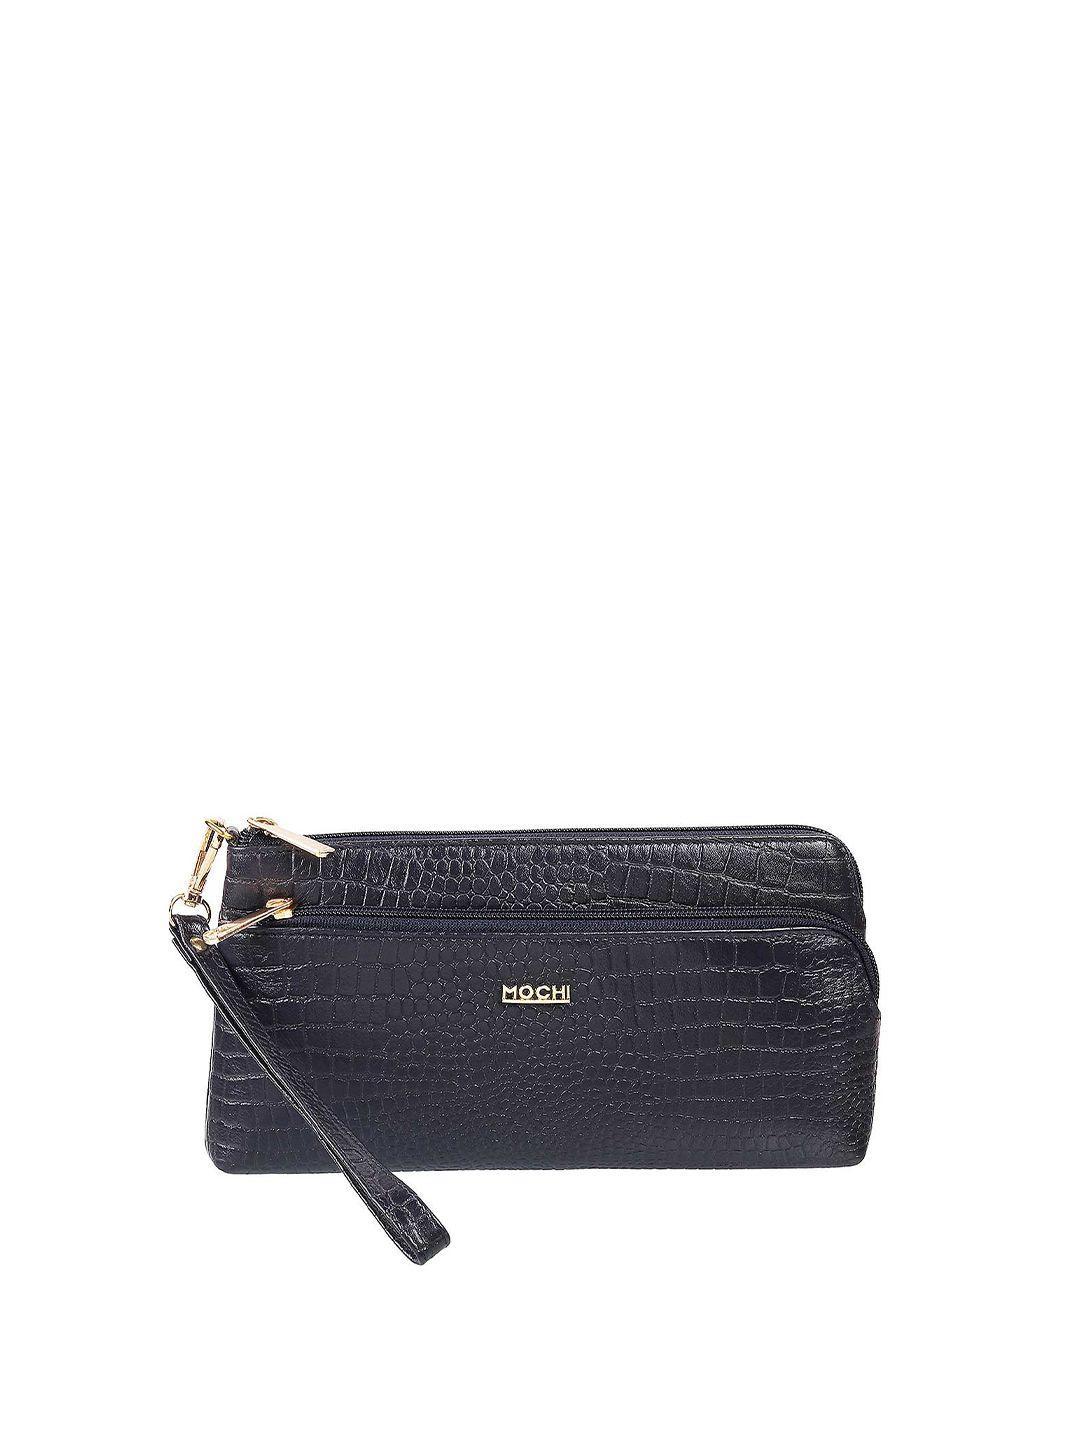 mochi women navy blue textured purse clutch